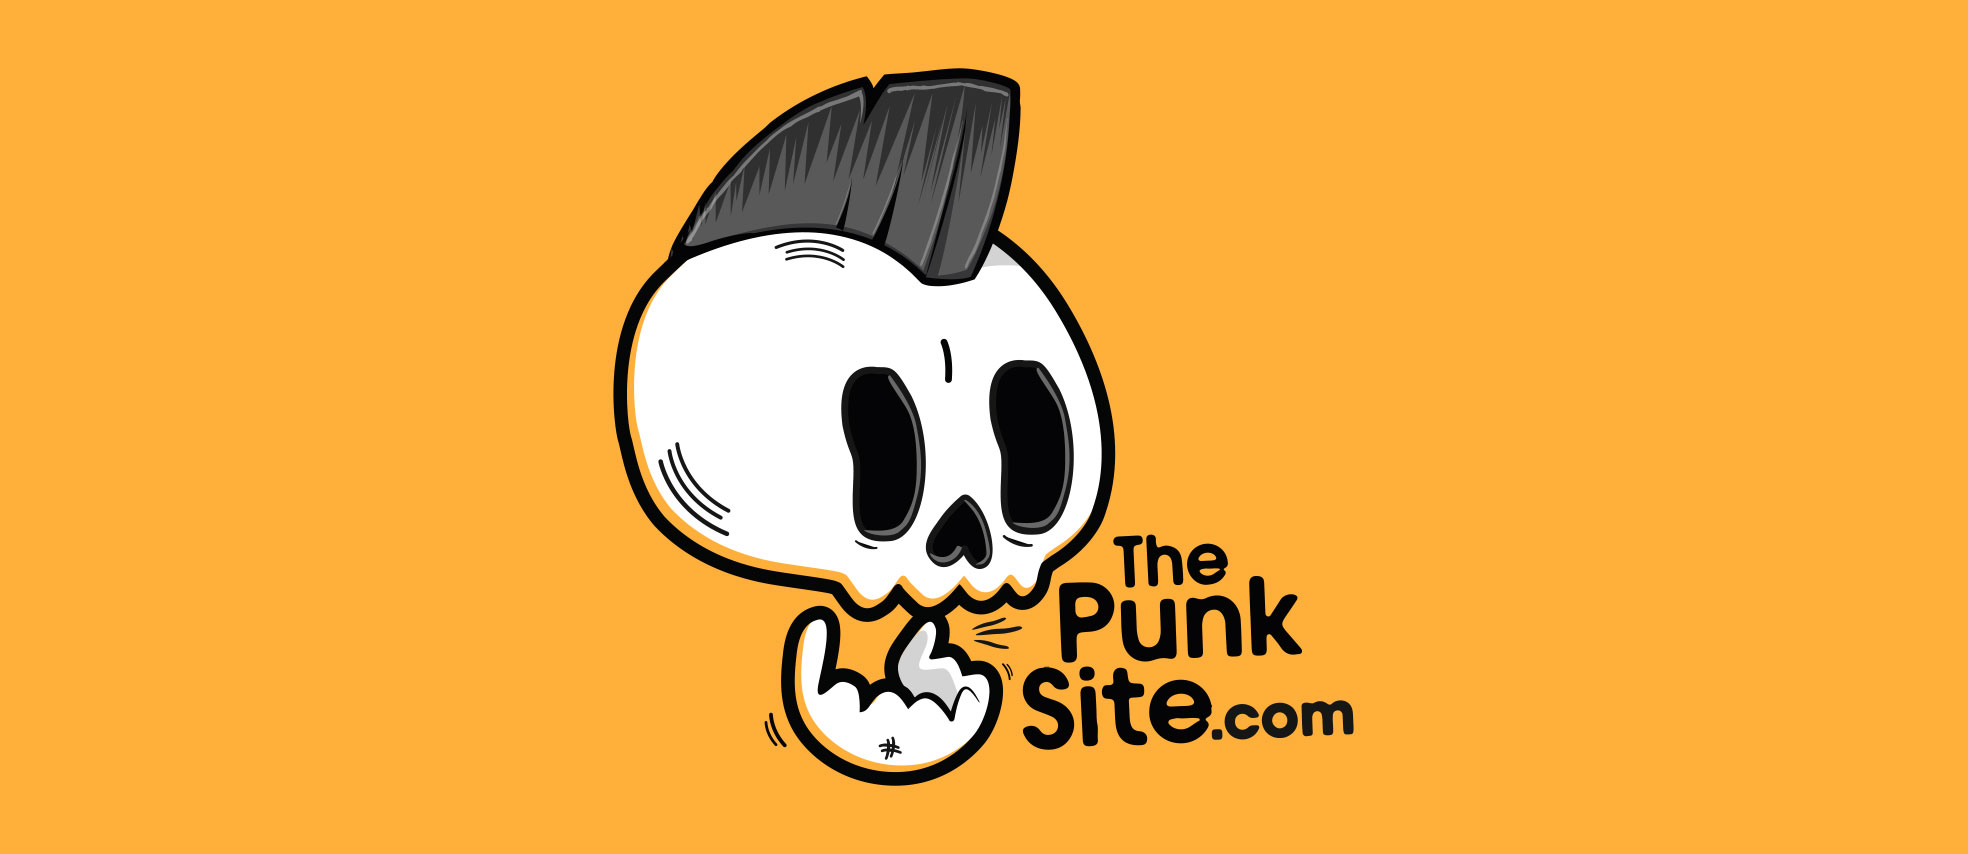 The Punk Site